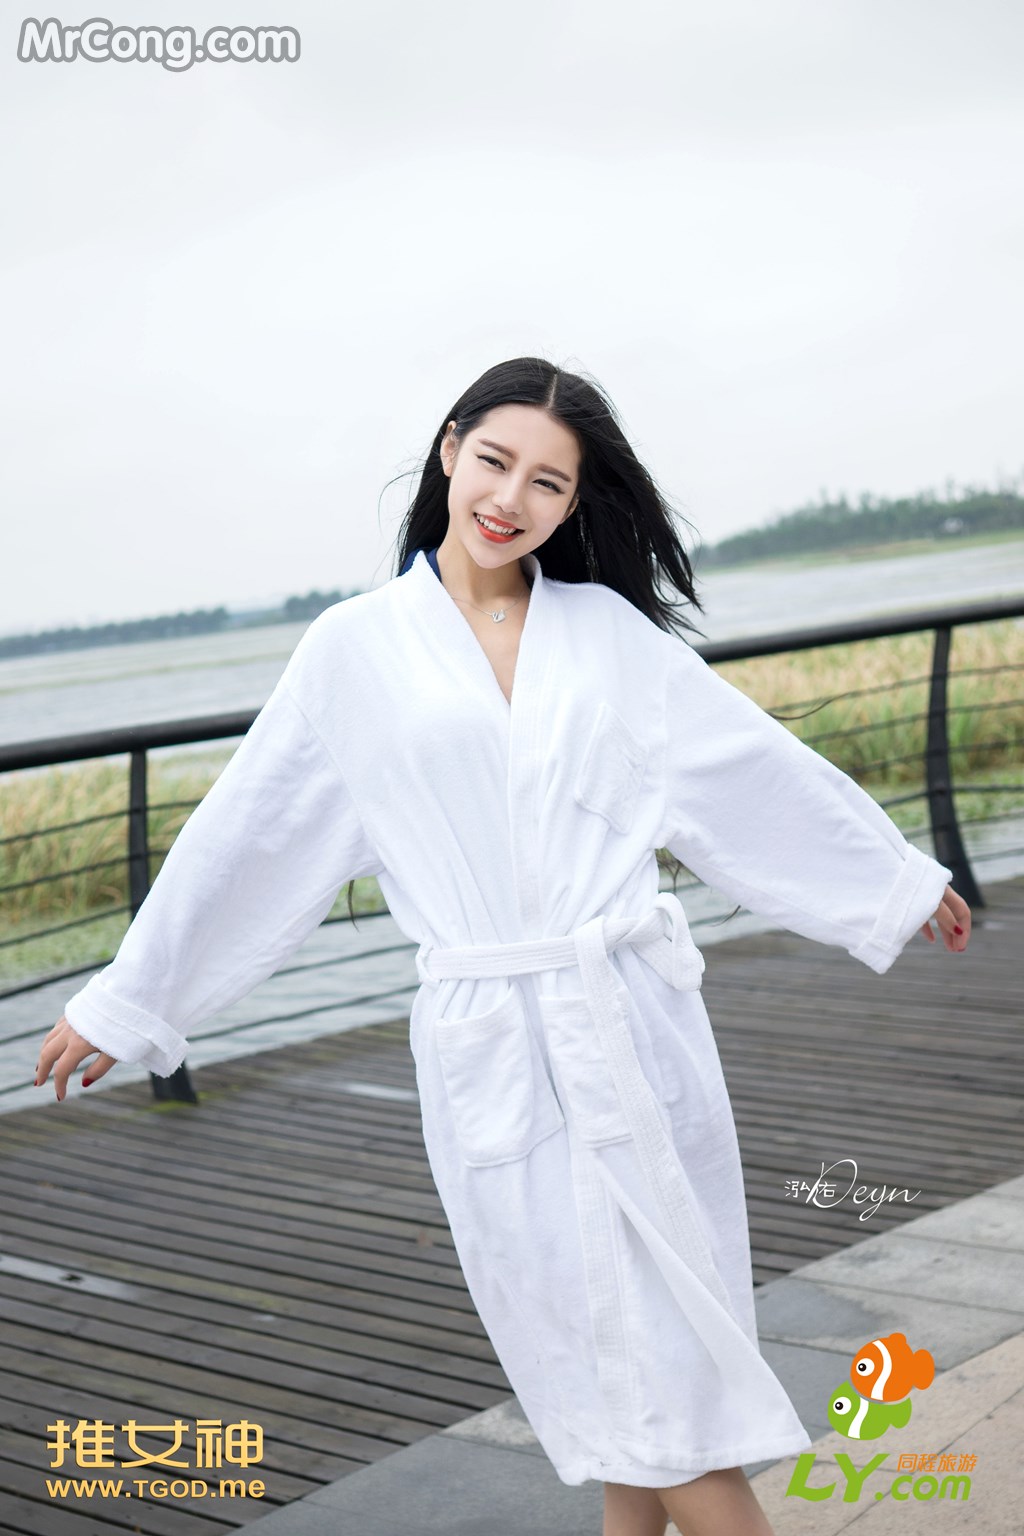 TGOD 2014-09-24: Model Xu Yan Xin (徐妍馨) (66 pictures) photo 1-1